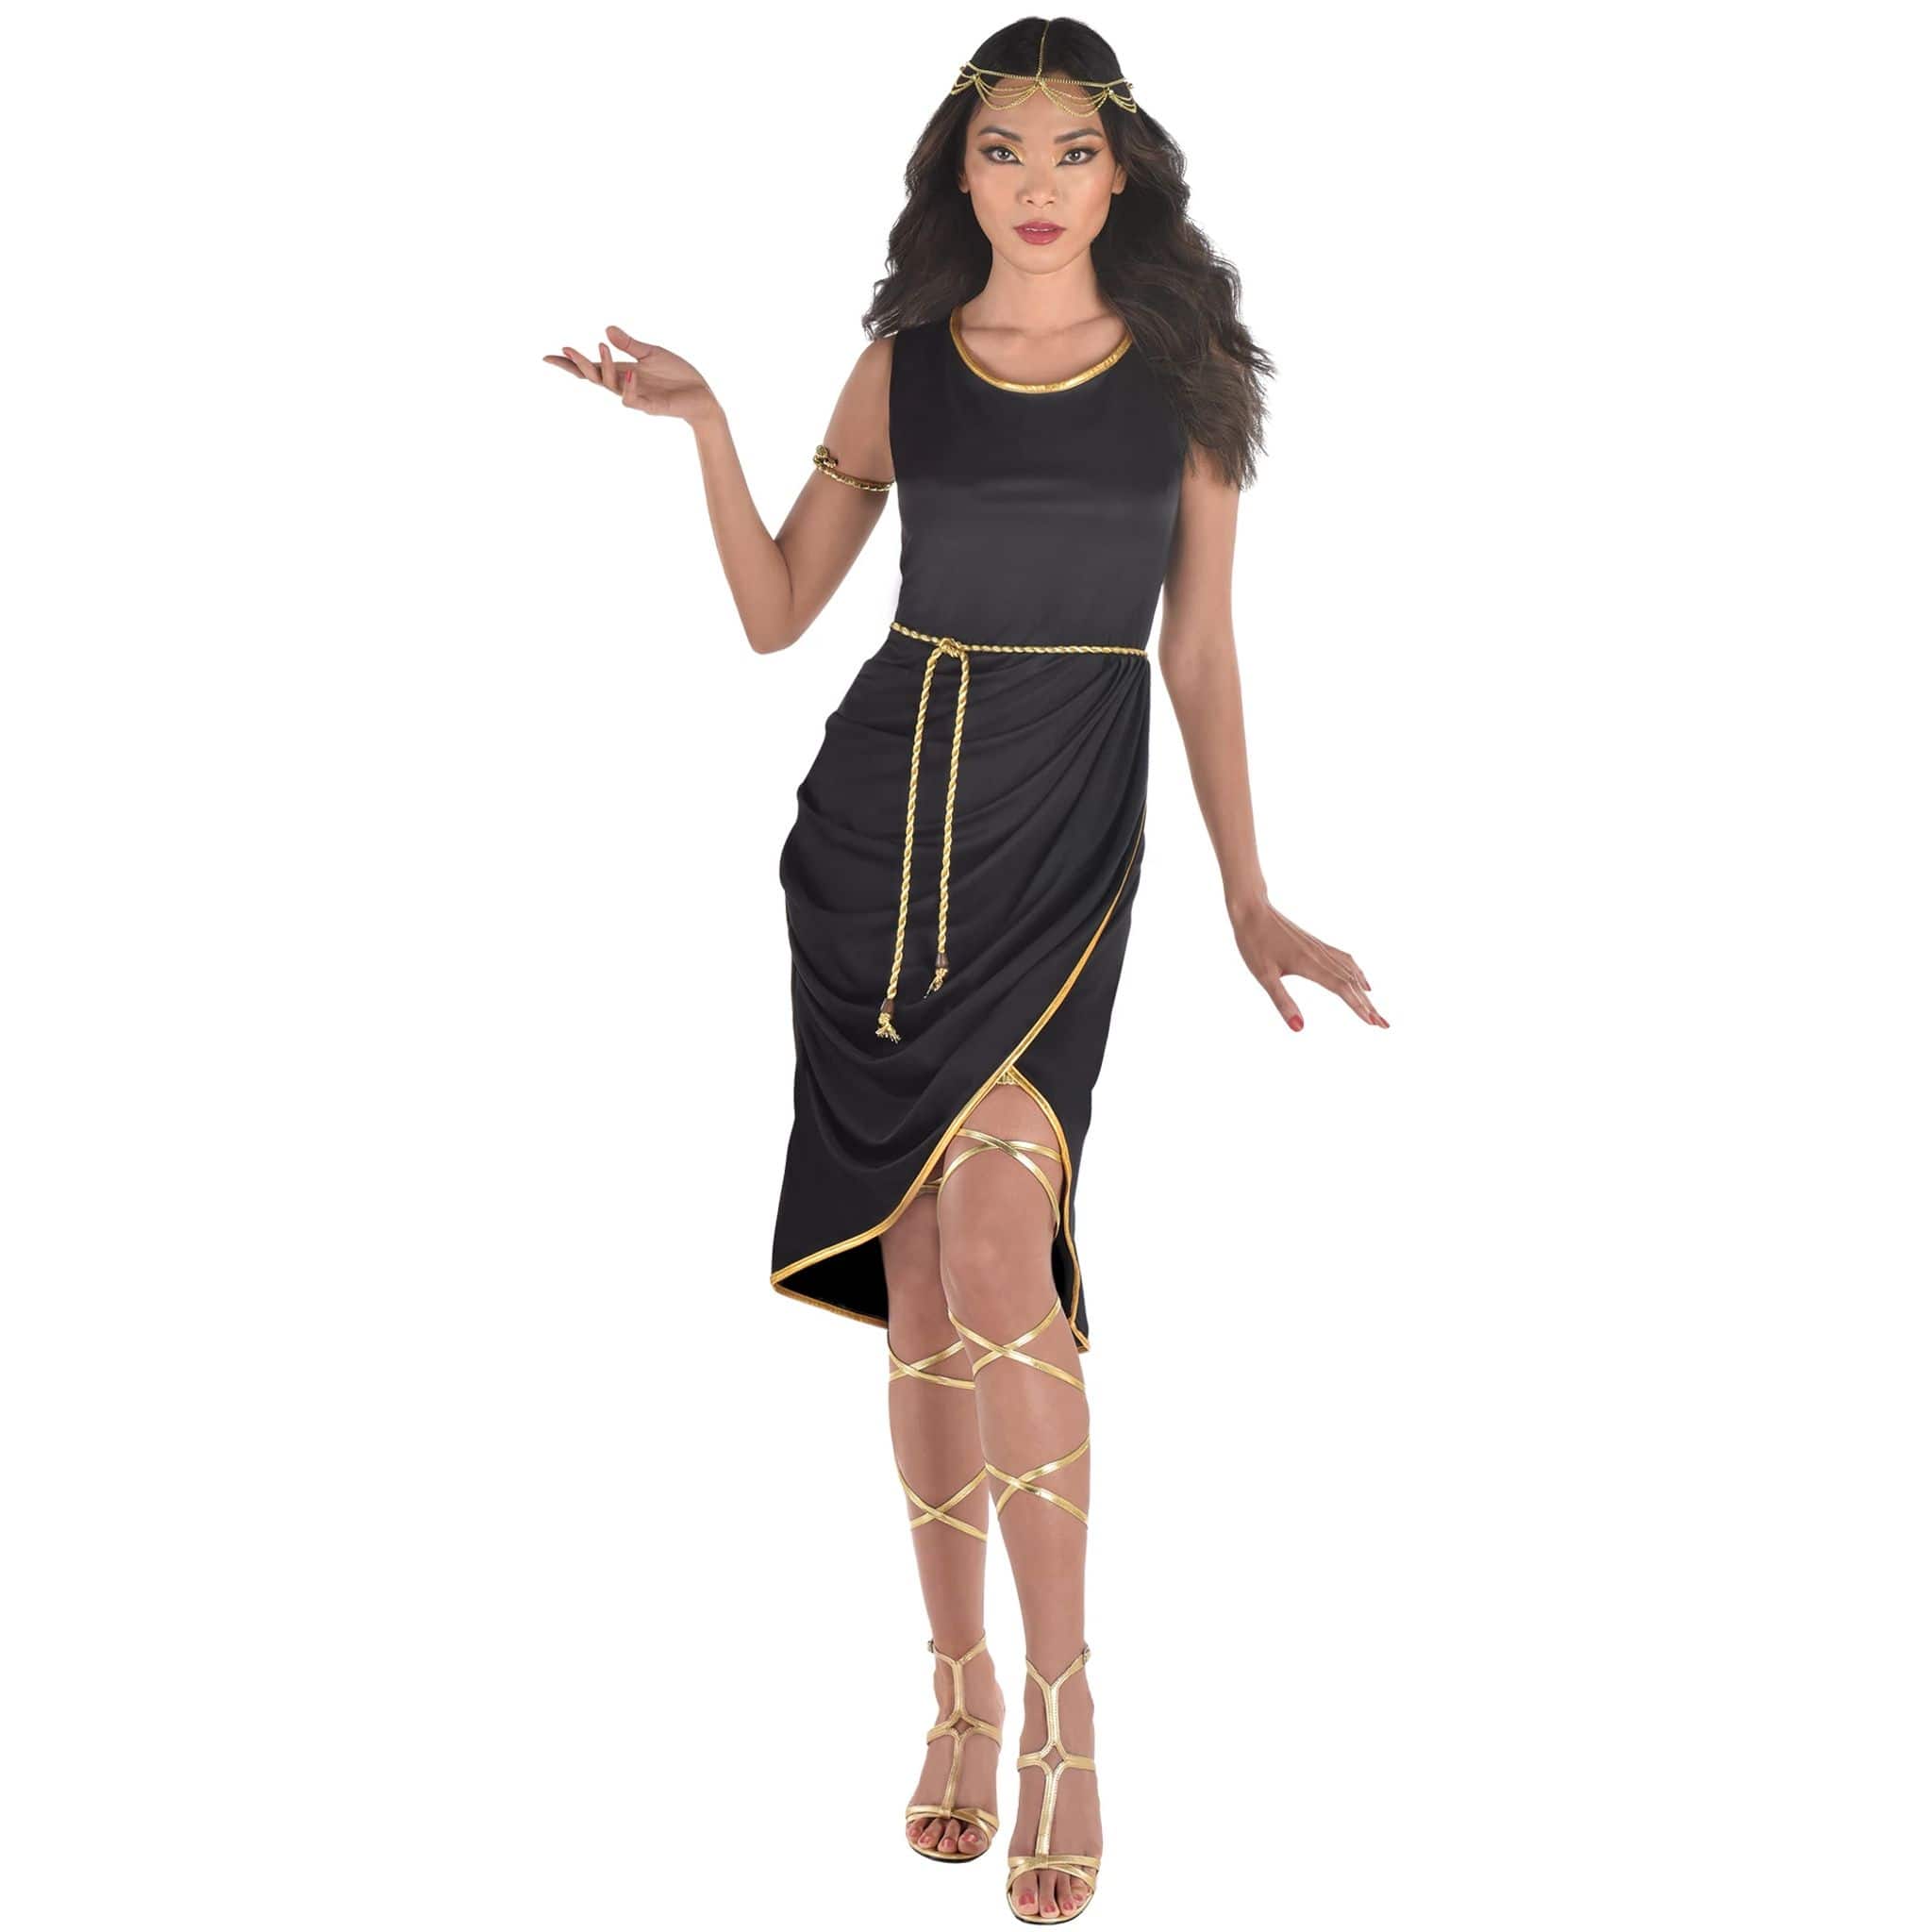 Egyptian Adult Standard Dress Costume